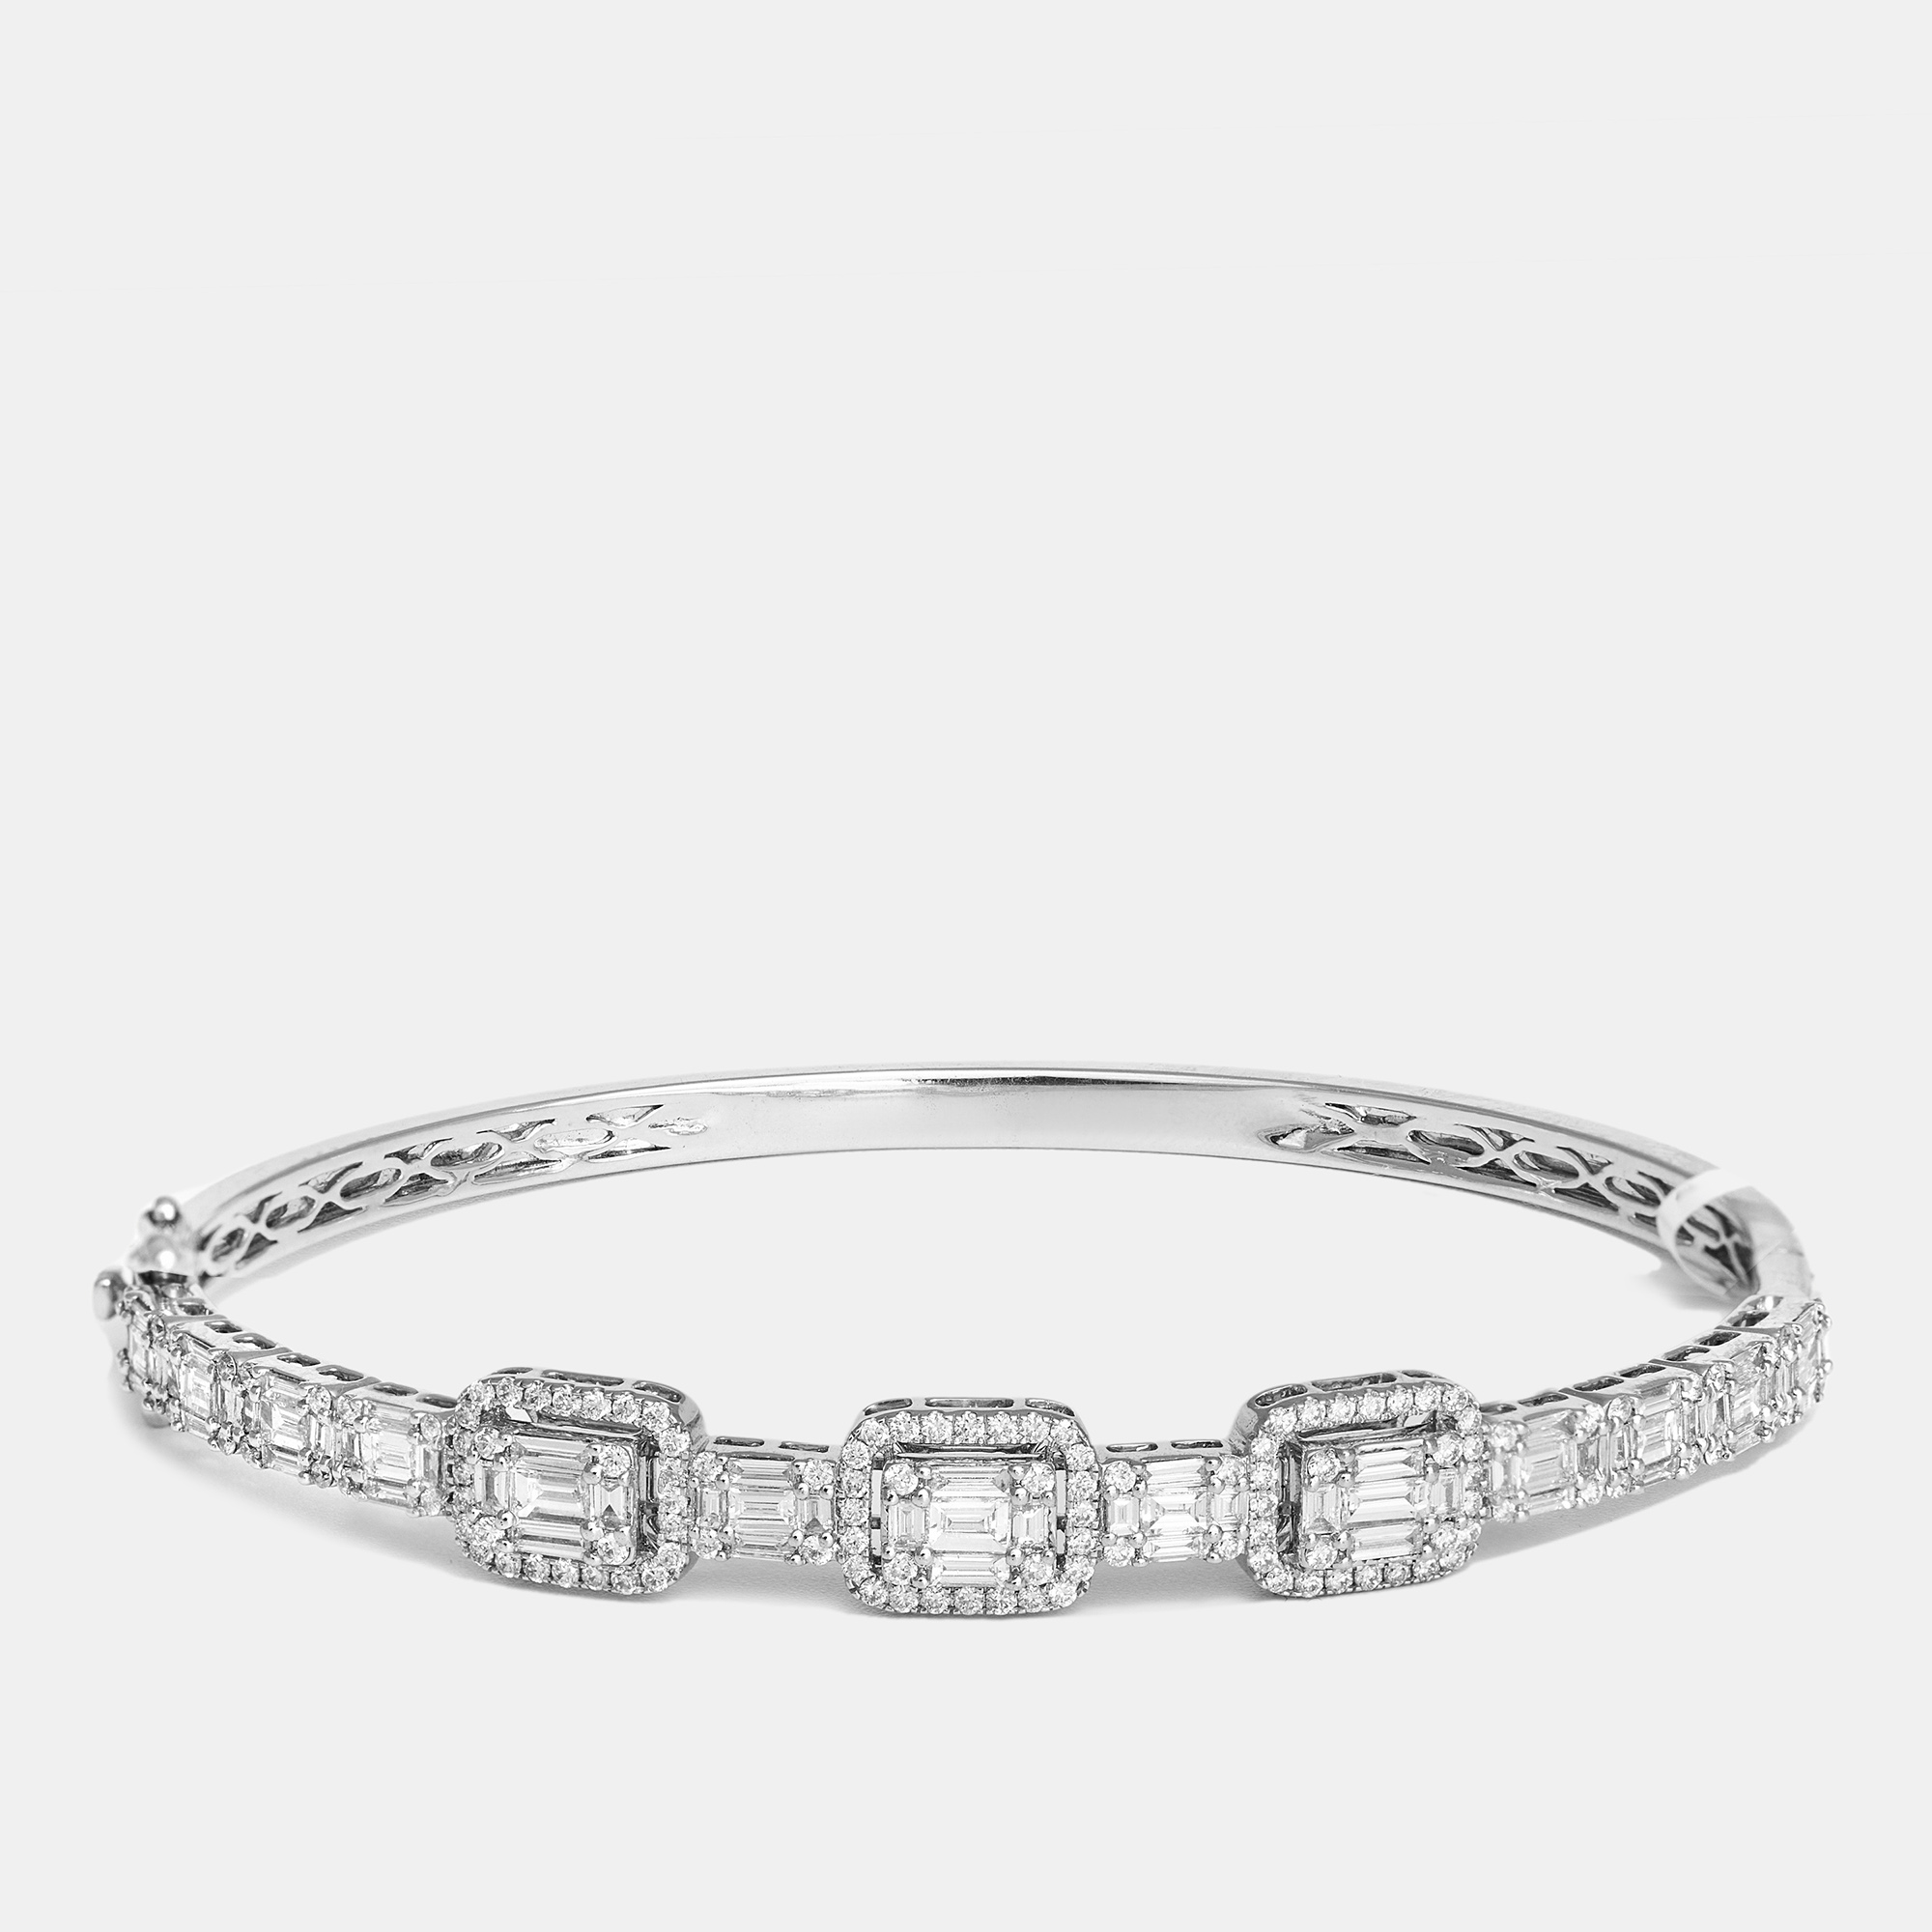 The diamond edit classy baguette and round diamond 2.07 ct 18k white gold bracelet 17